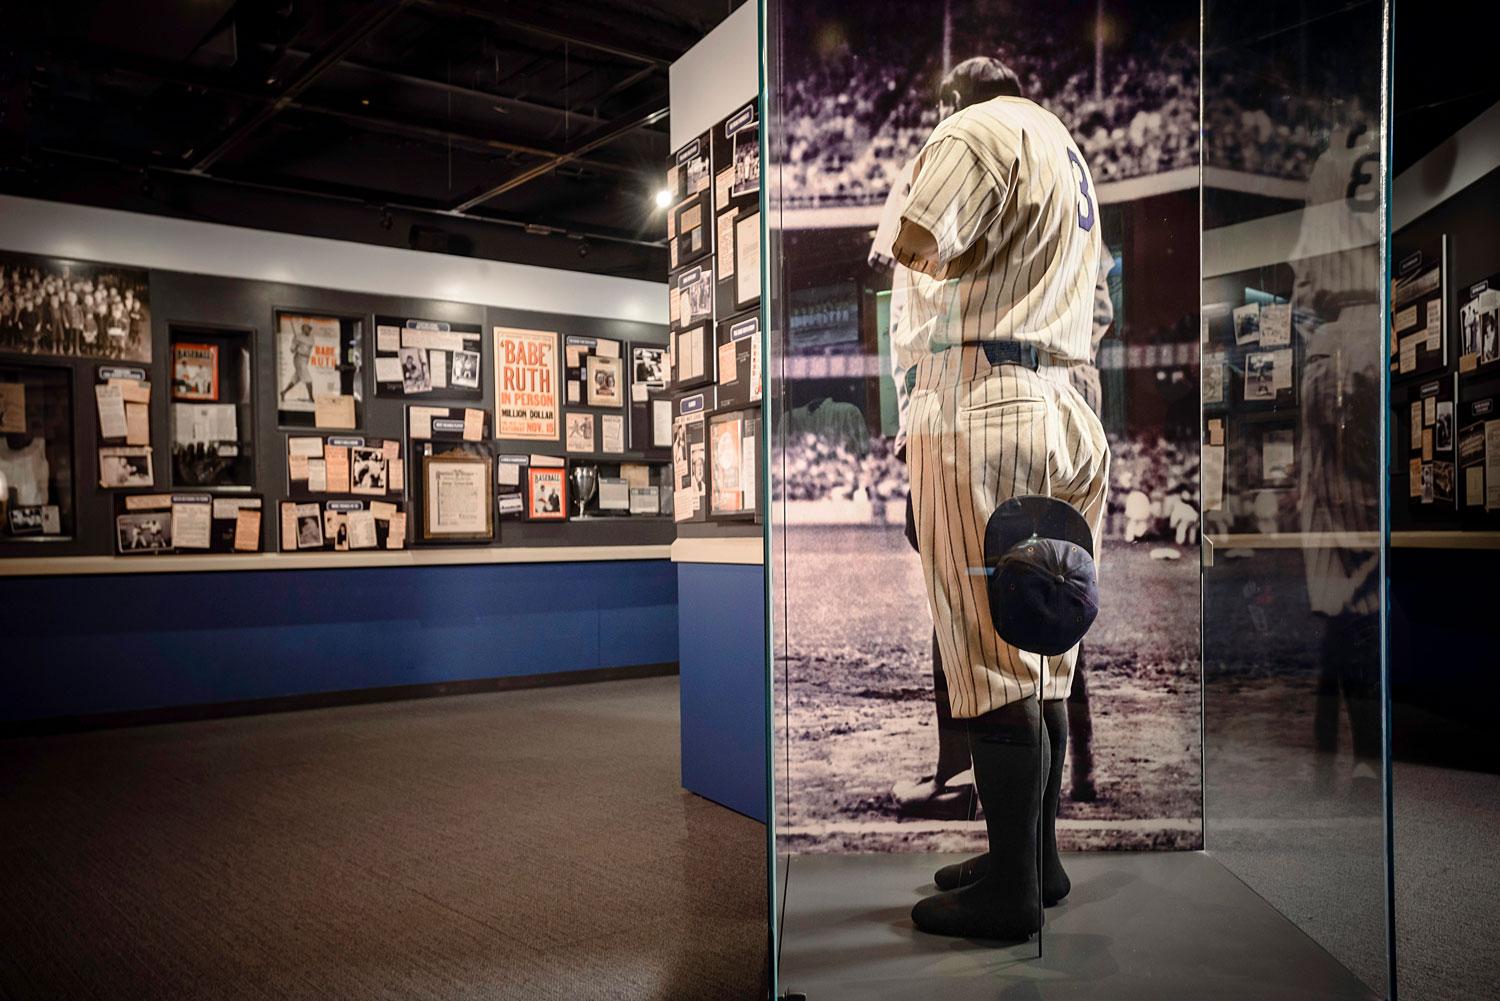 Babe Ruth exhibit